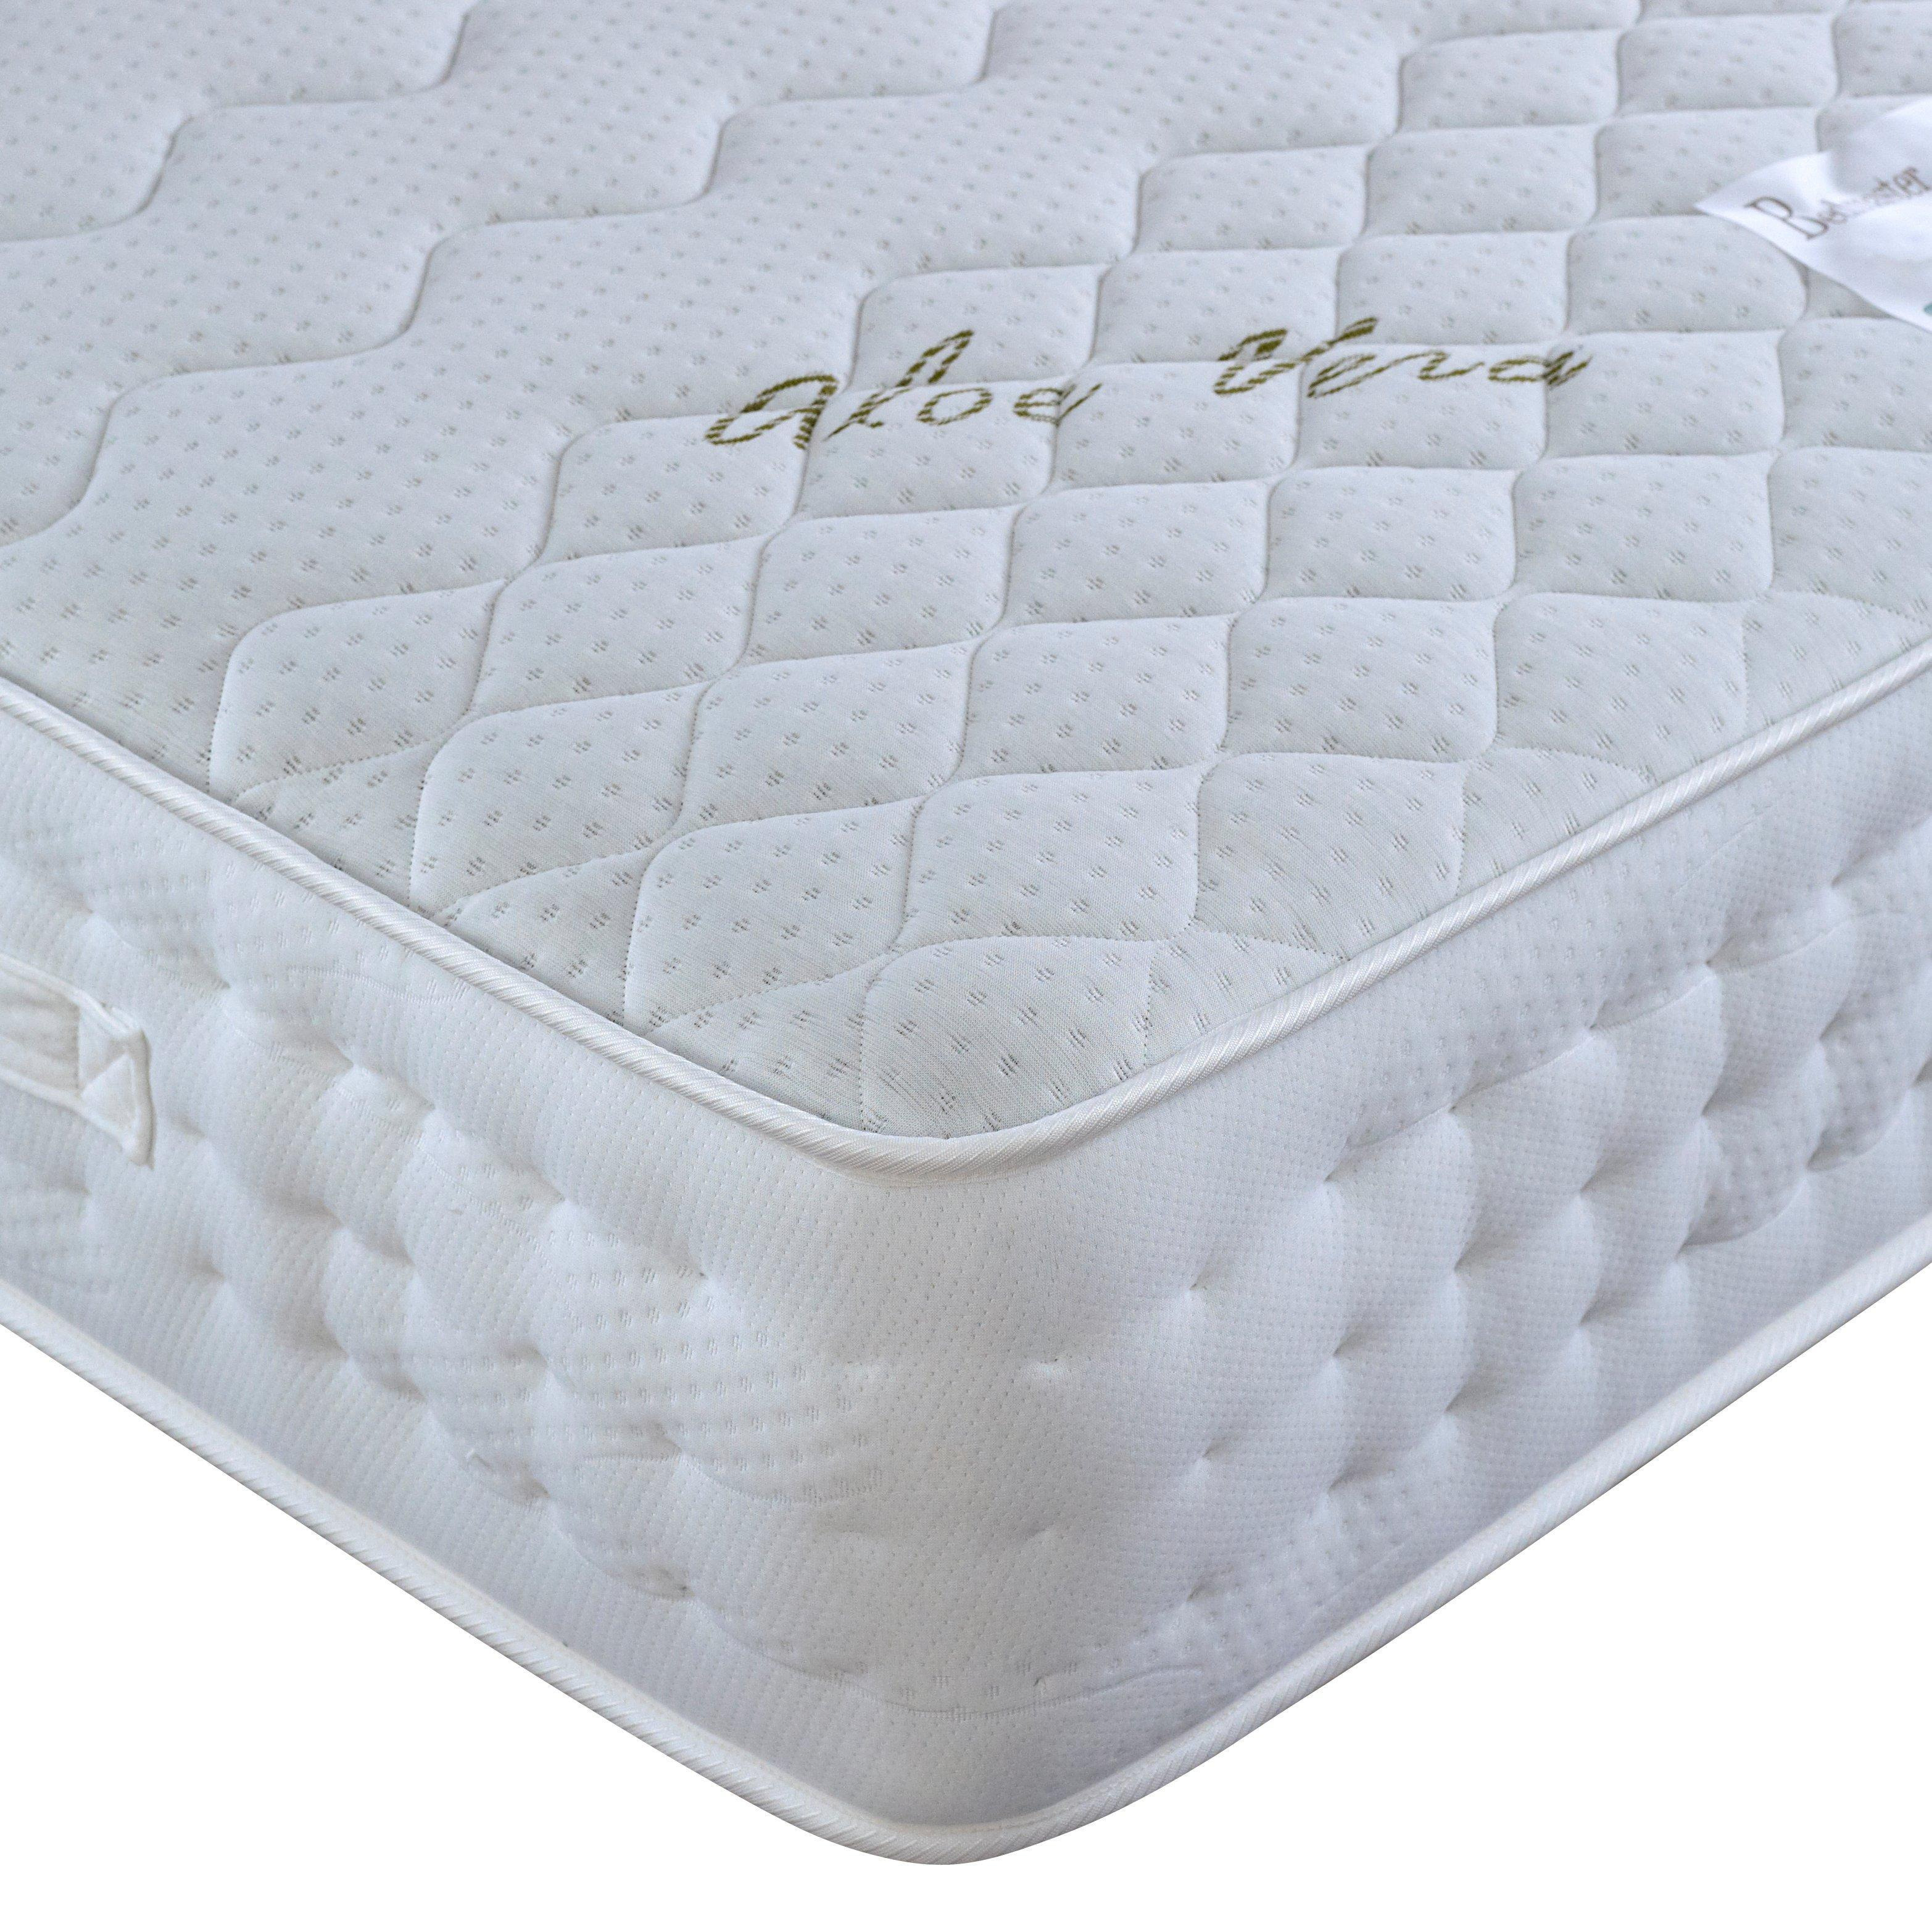 Aloe Vera Pocket Sprung Memory Foam Mattress - image 1